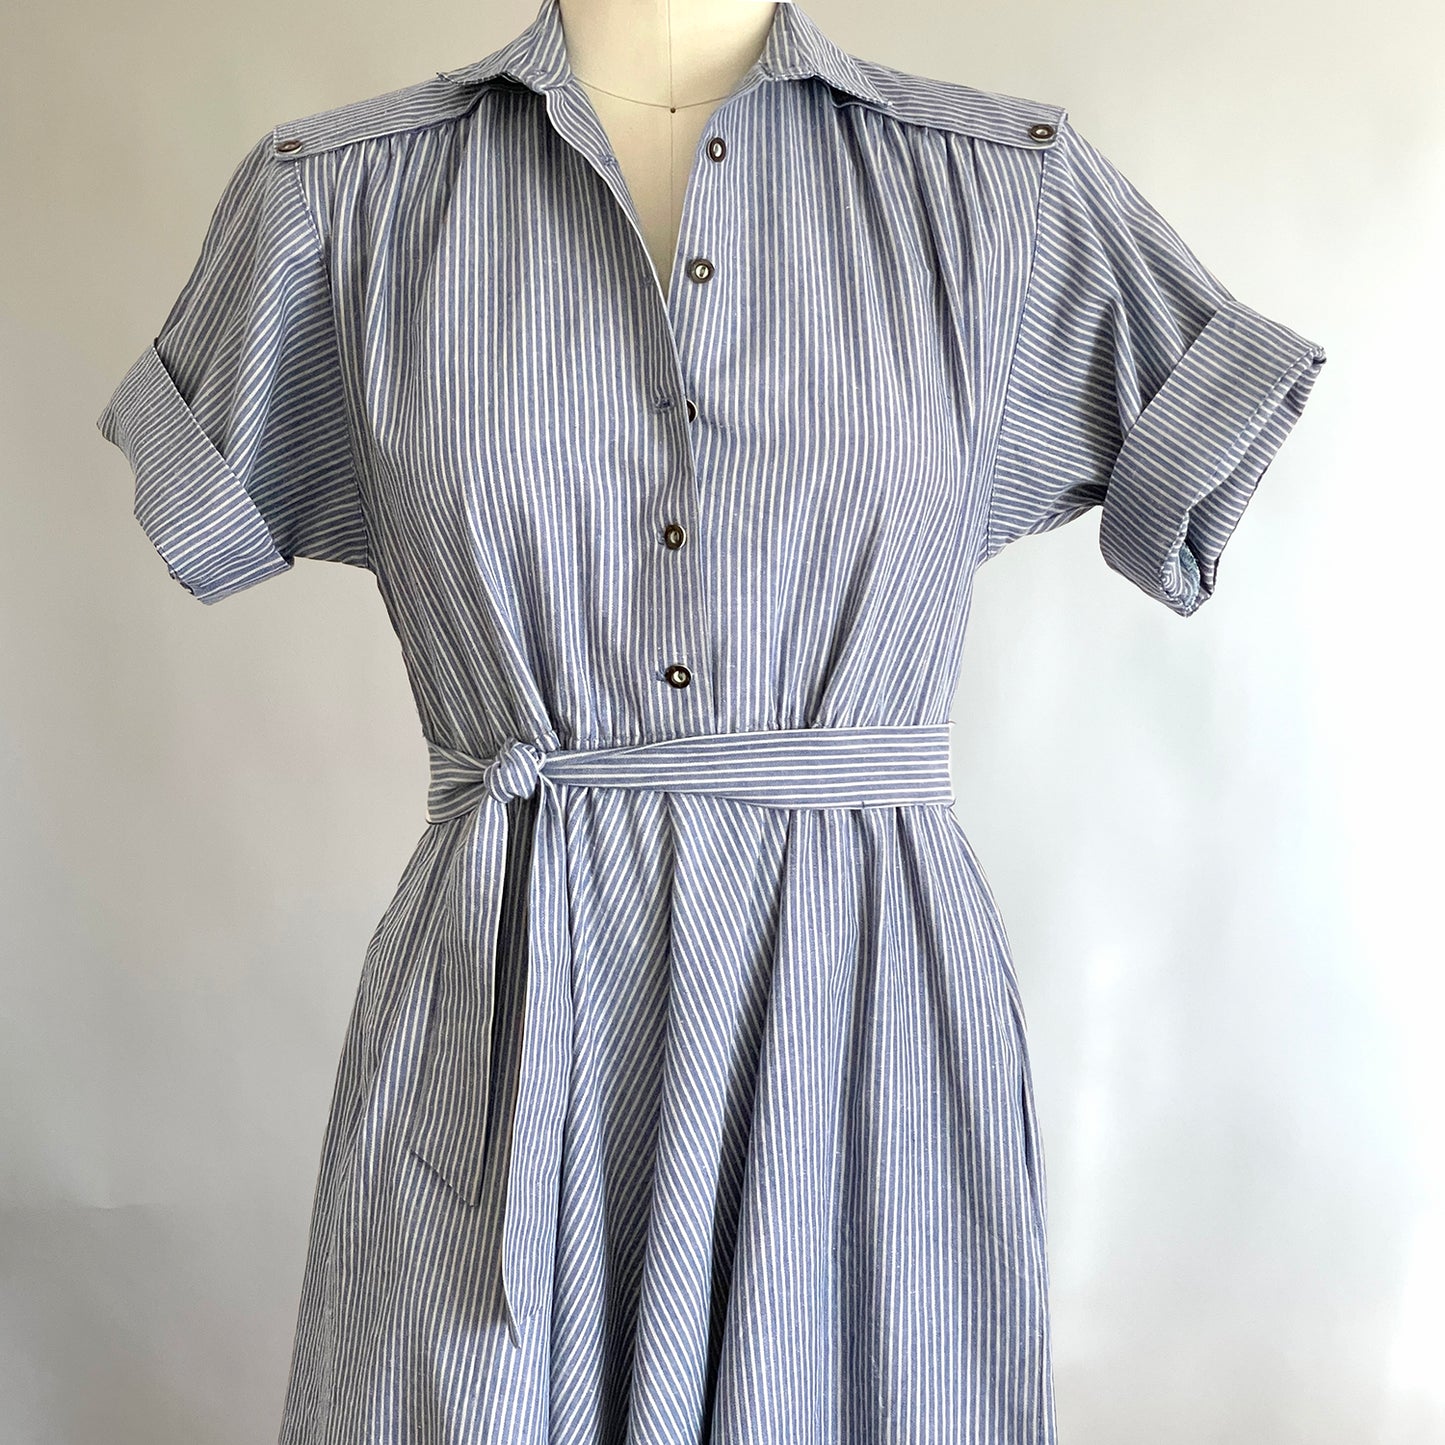 Vintage Indigo Striped Dress